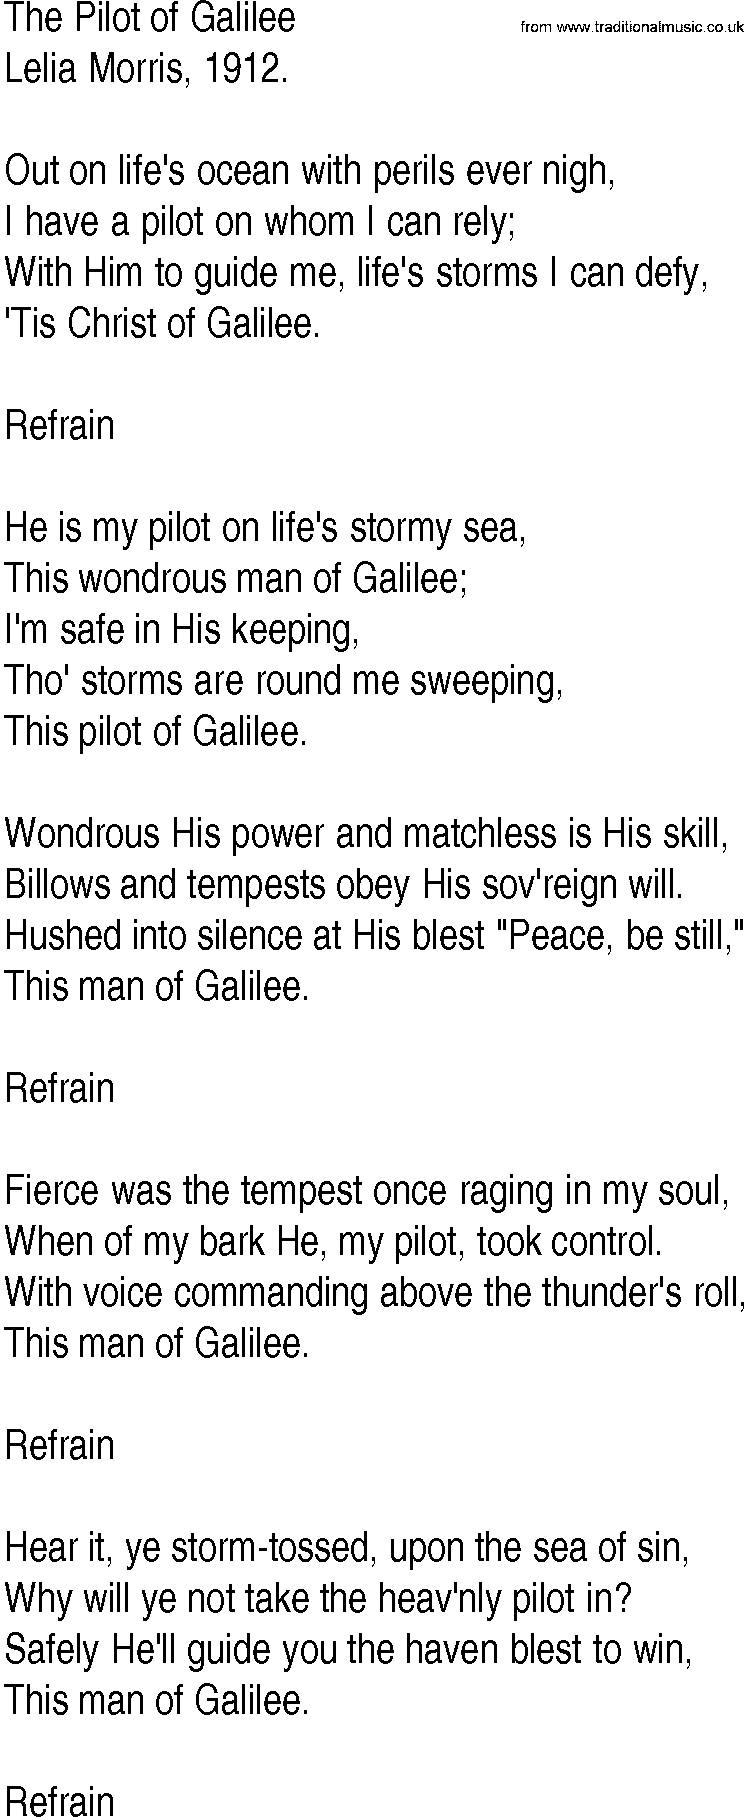 Hymn and Gospel Song: The Pilot of Galilee by Lelia Morris lyrics